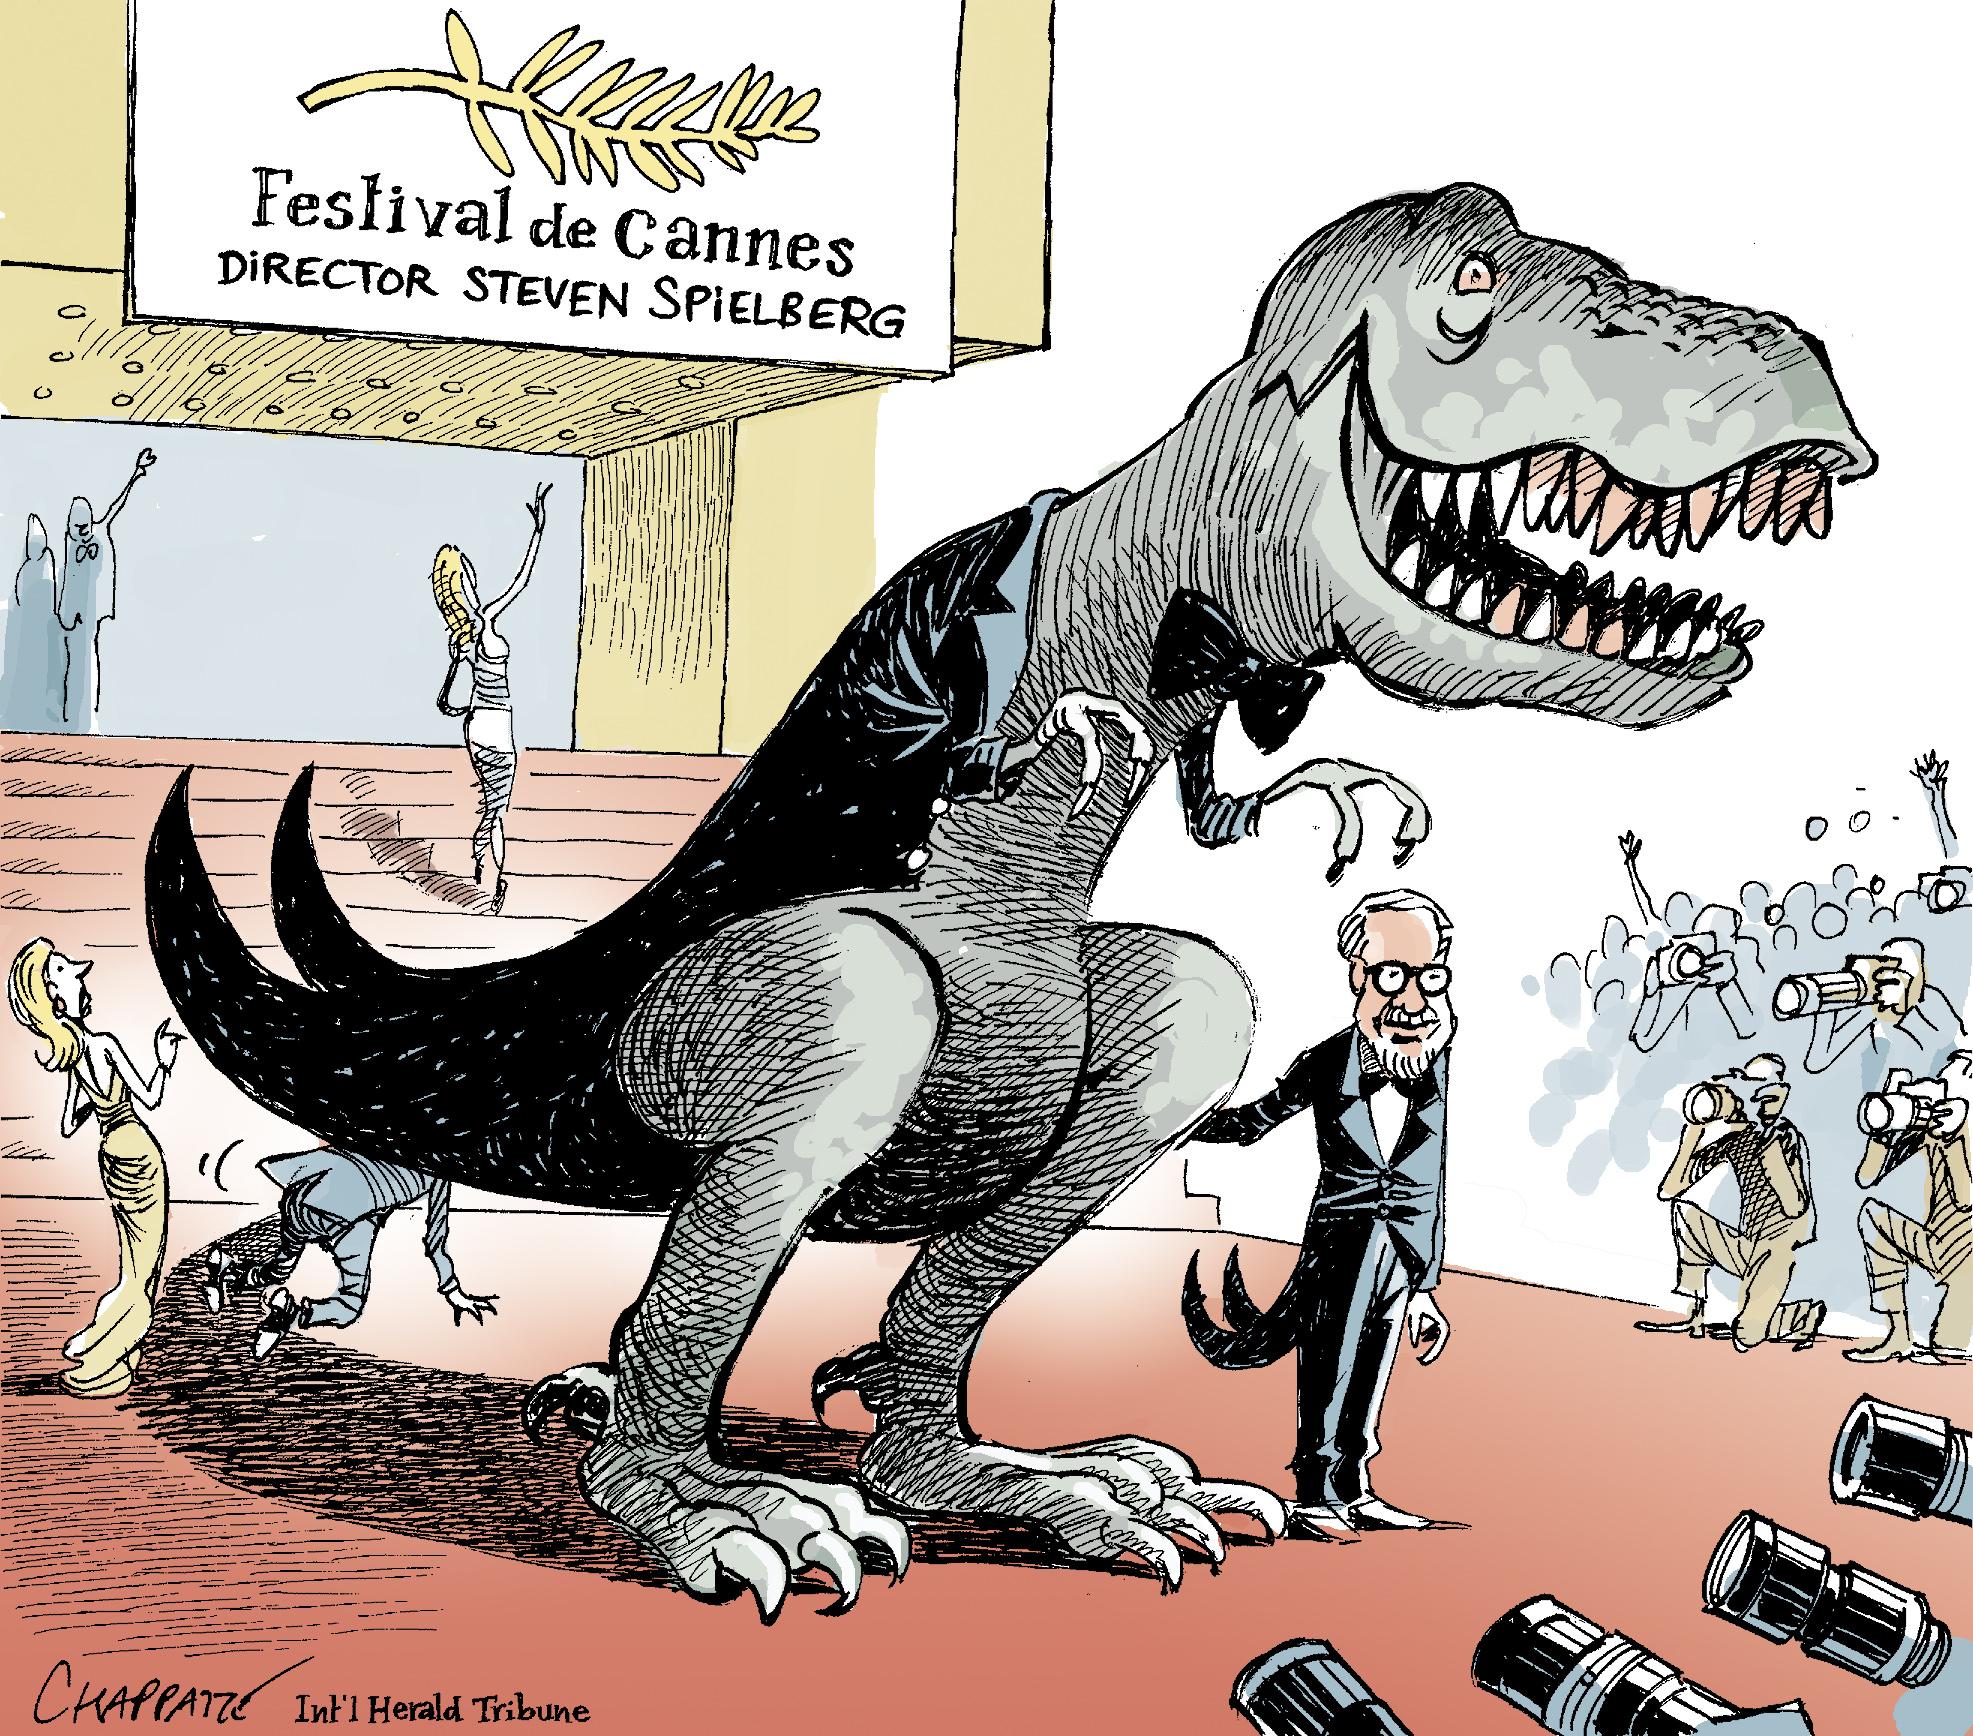 Steven Spielberg opens Cannes